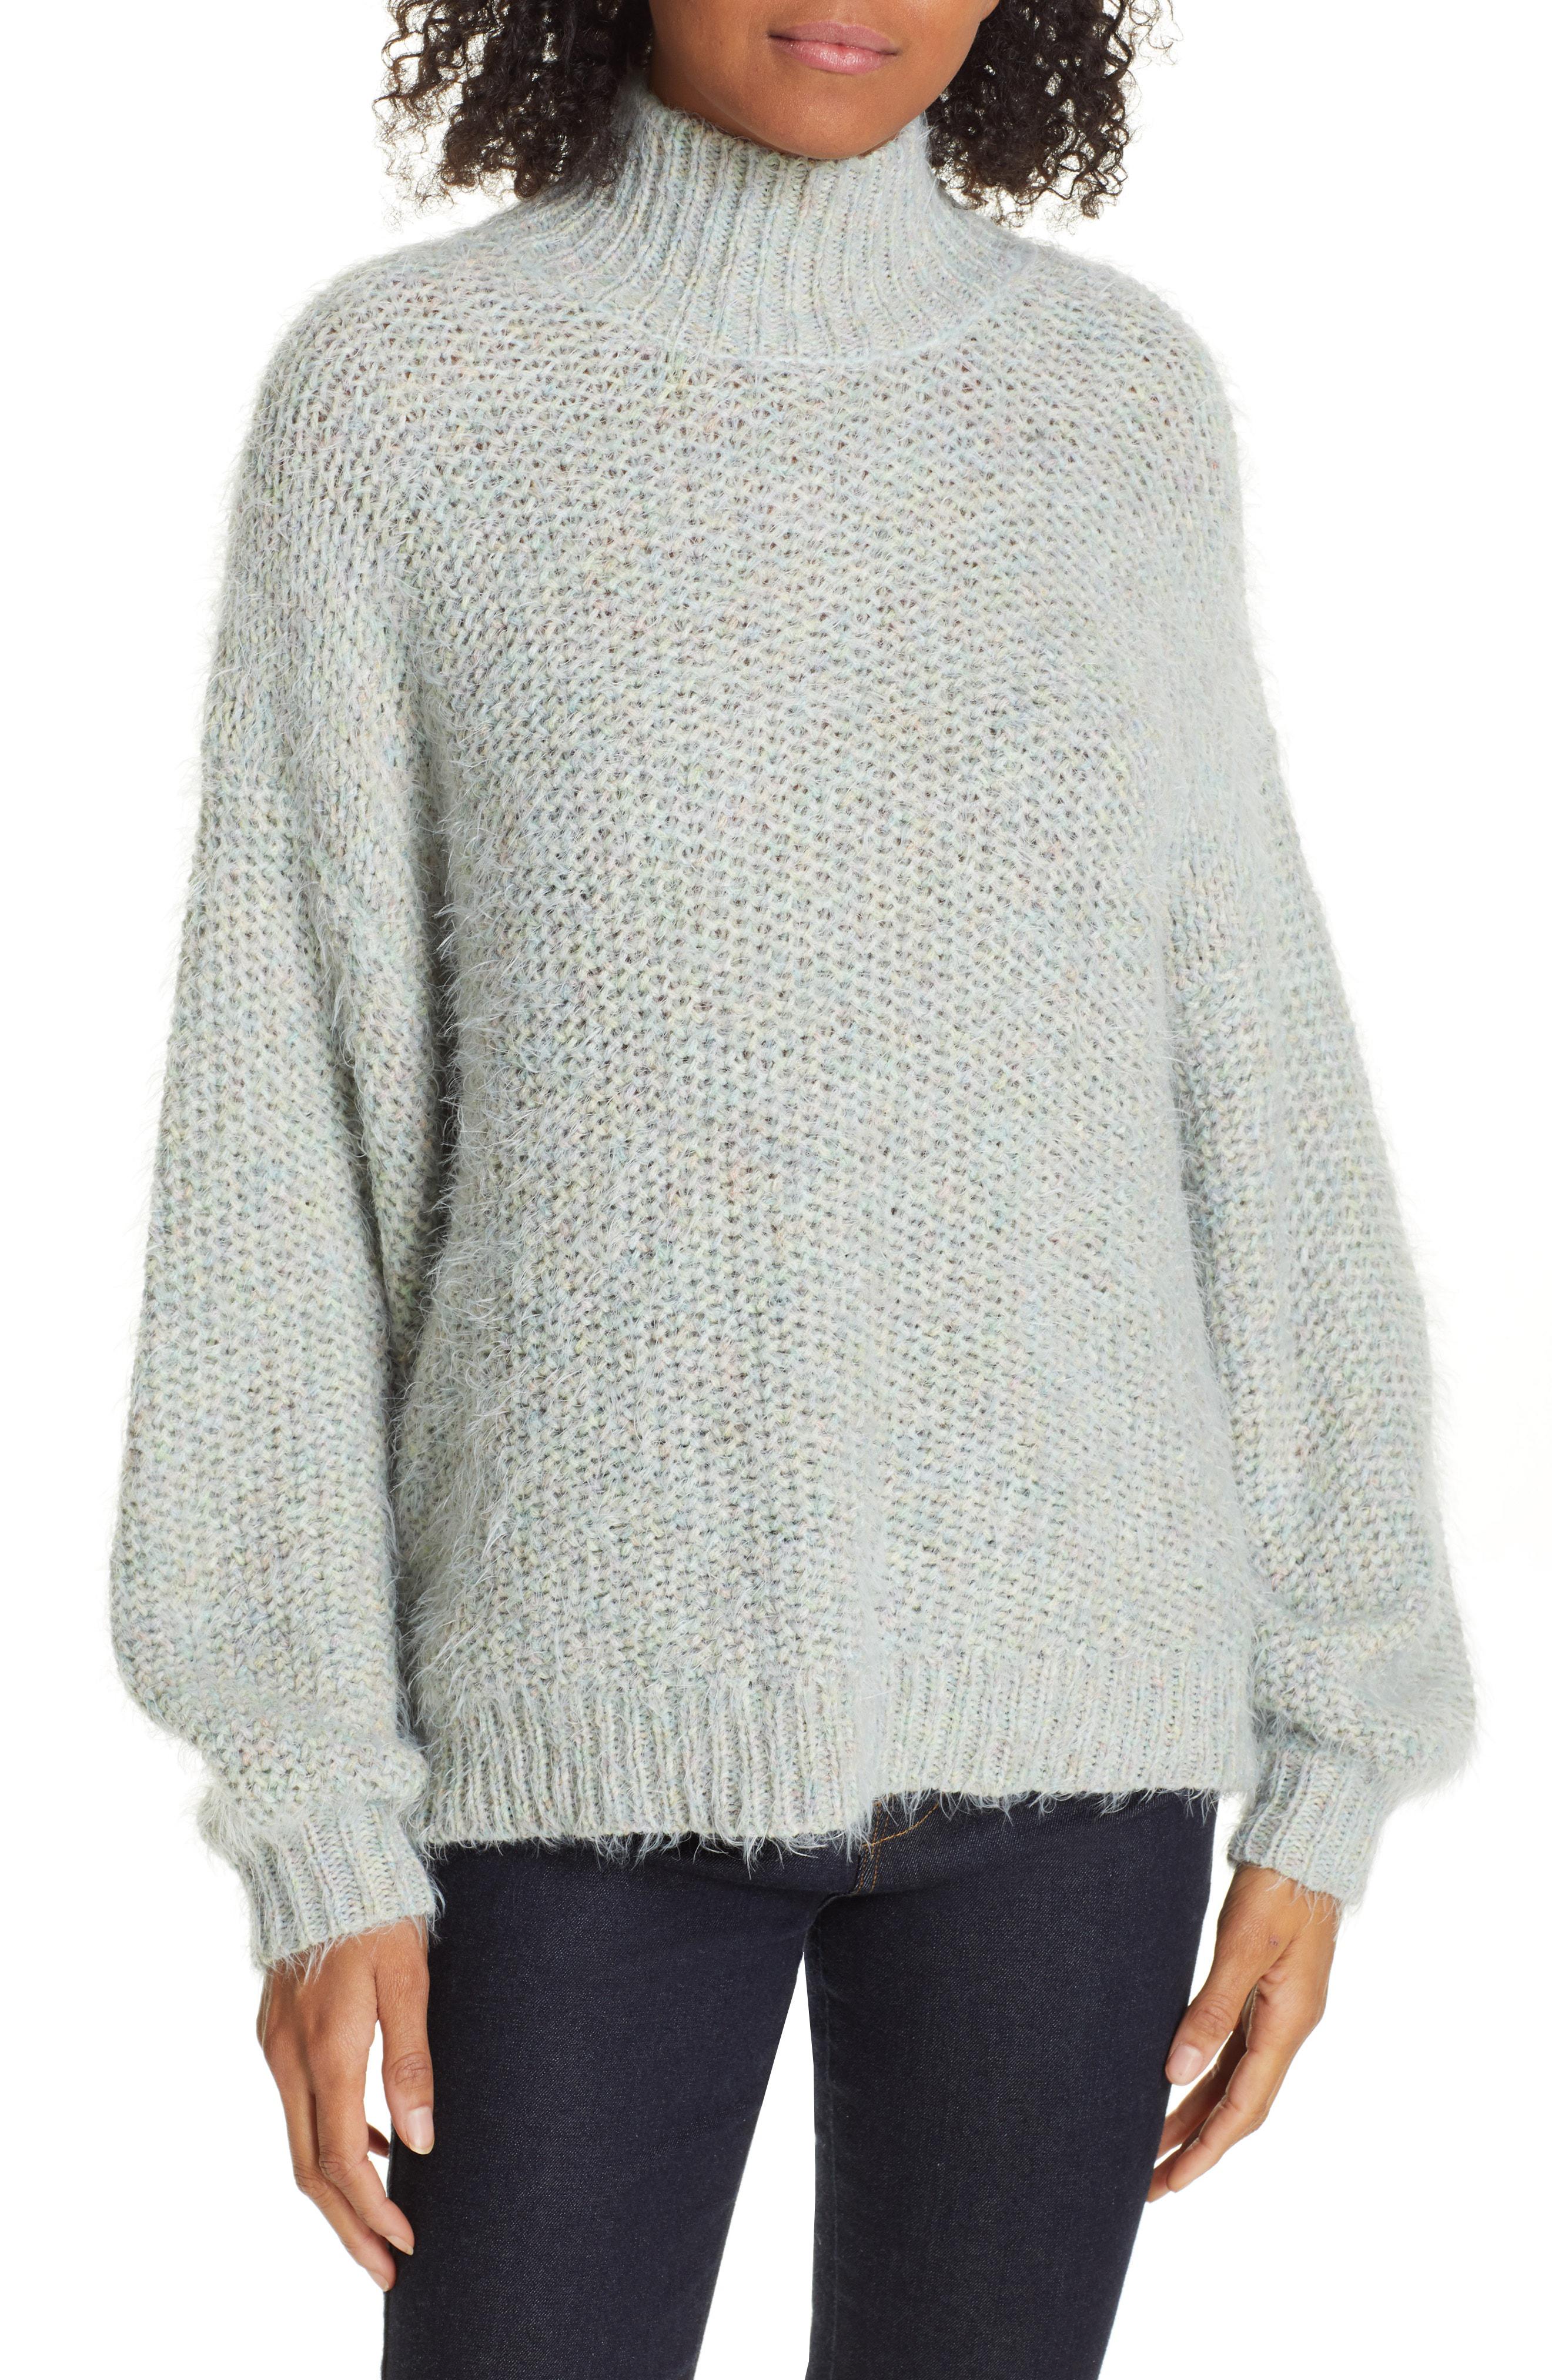 Lyst - Joie Markita Sweater in Gray